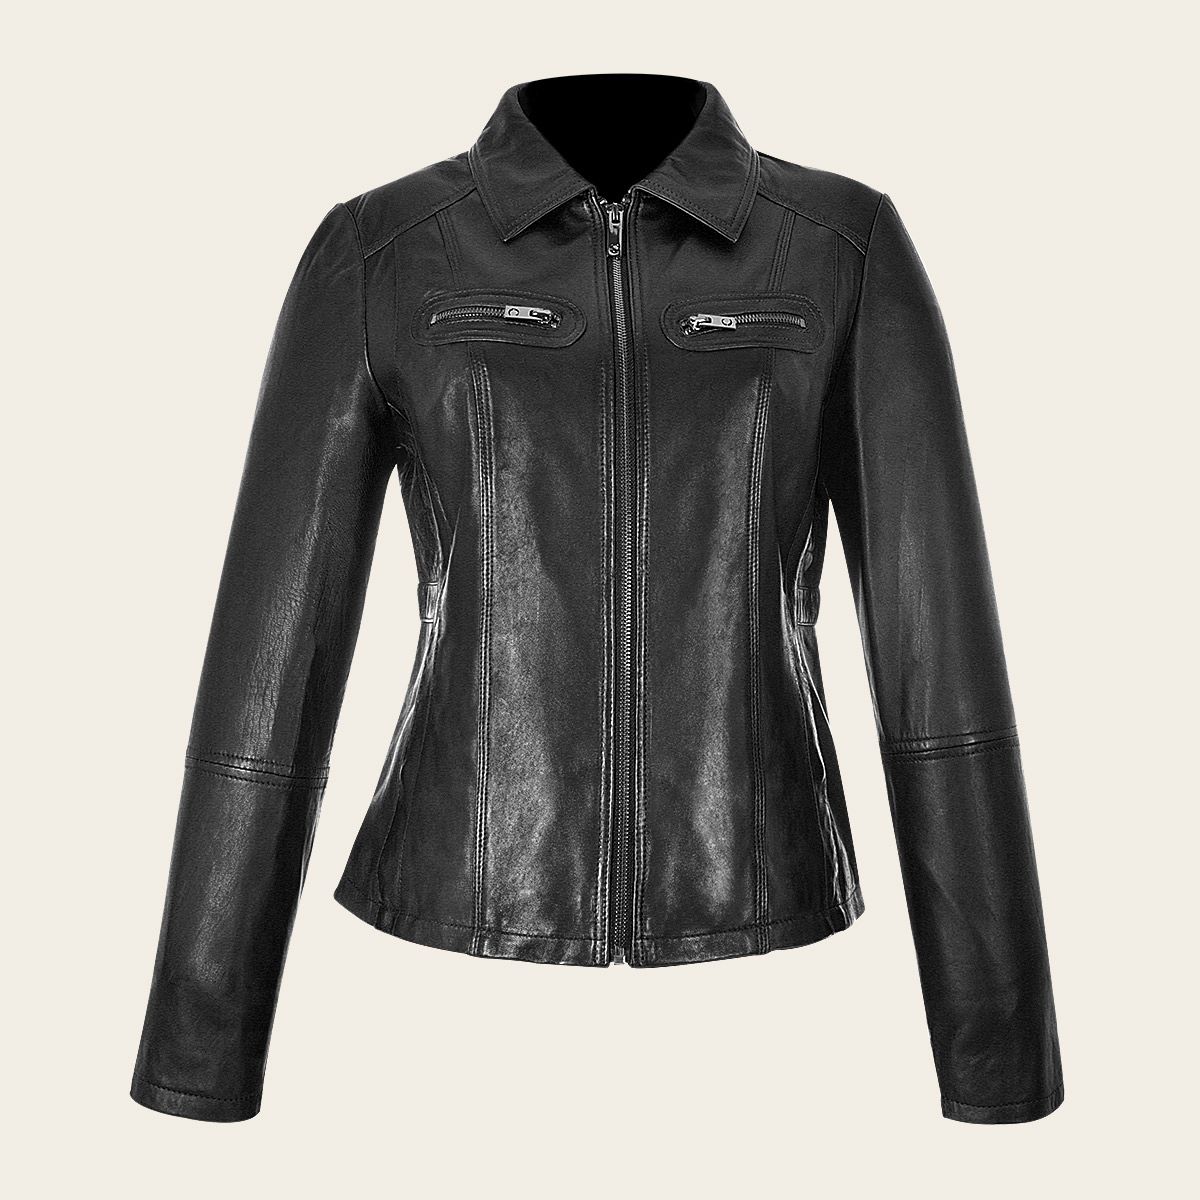 Womens black leather jacket with decorative pockets - MCMP004 - Cuadra Shop